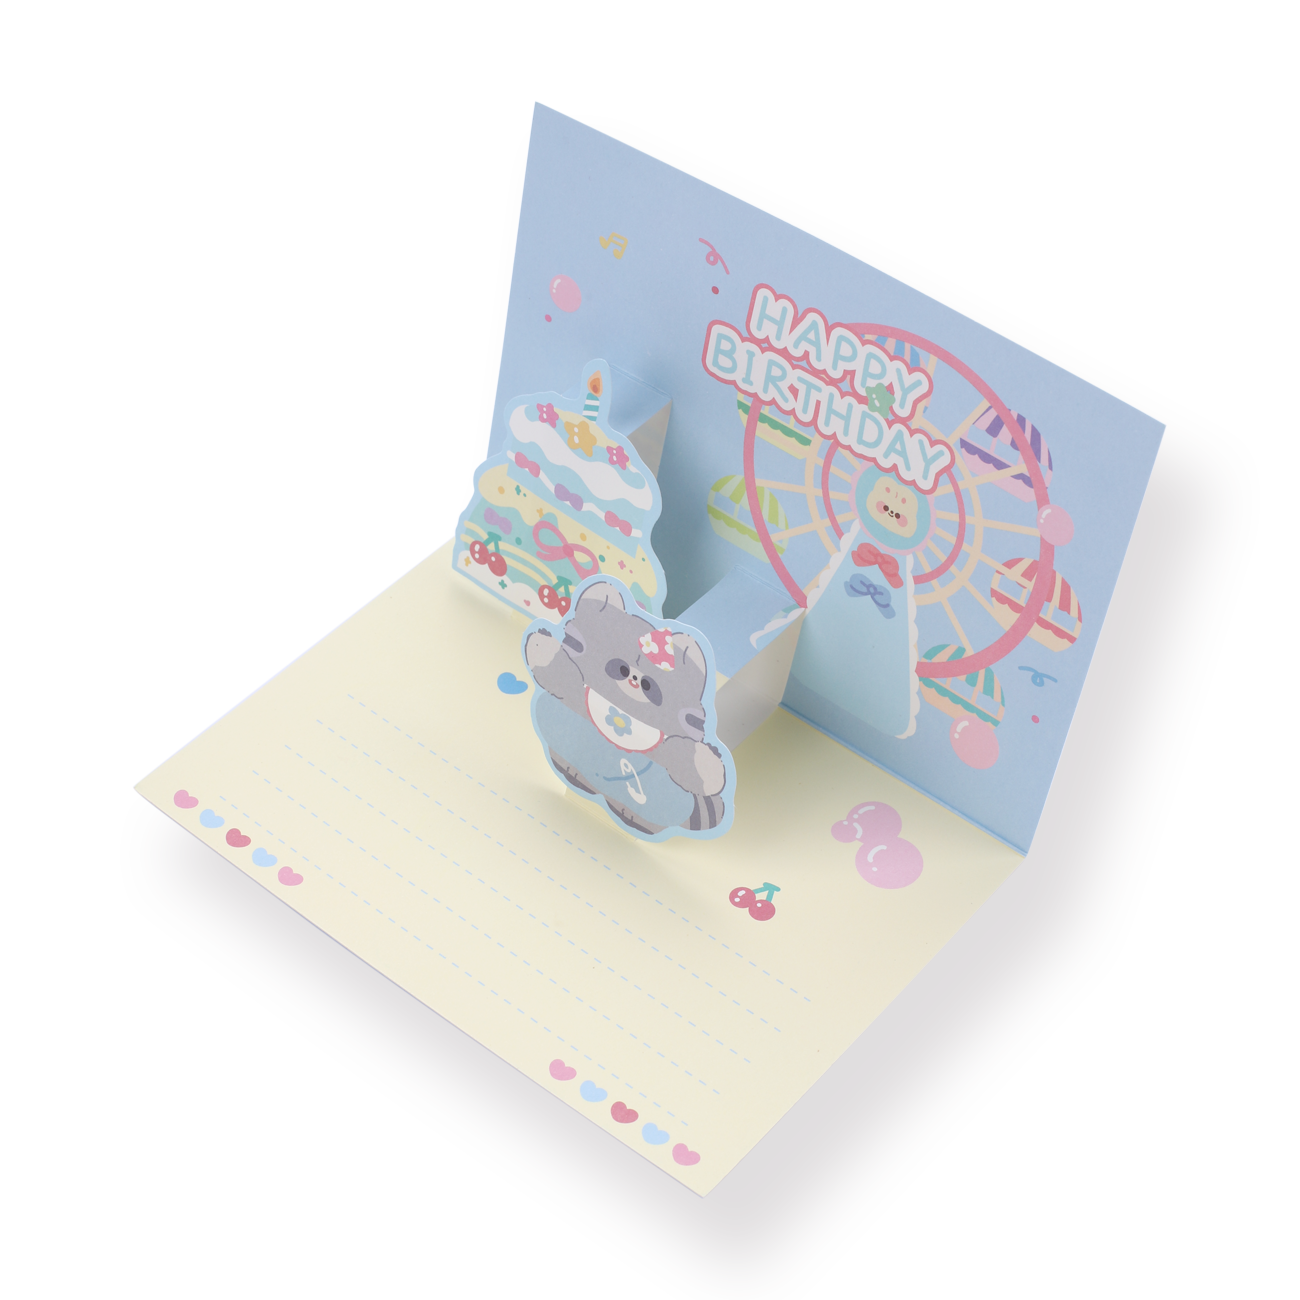 3D Birthday Greeting Card - Blue - Stationery Pal